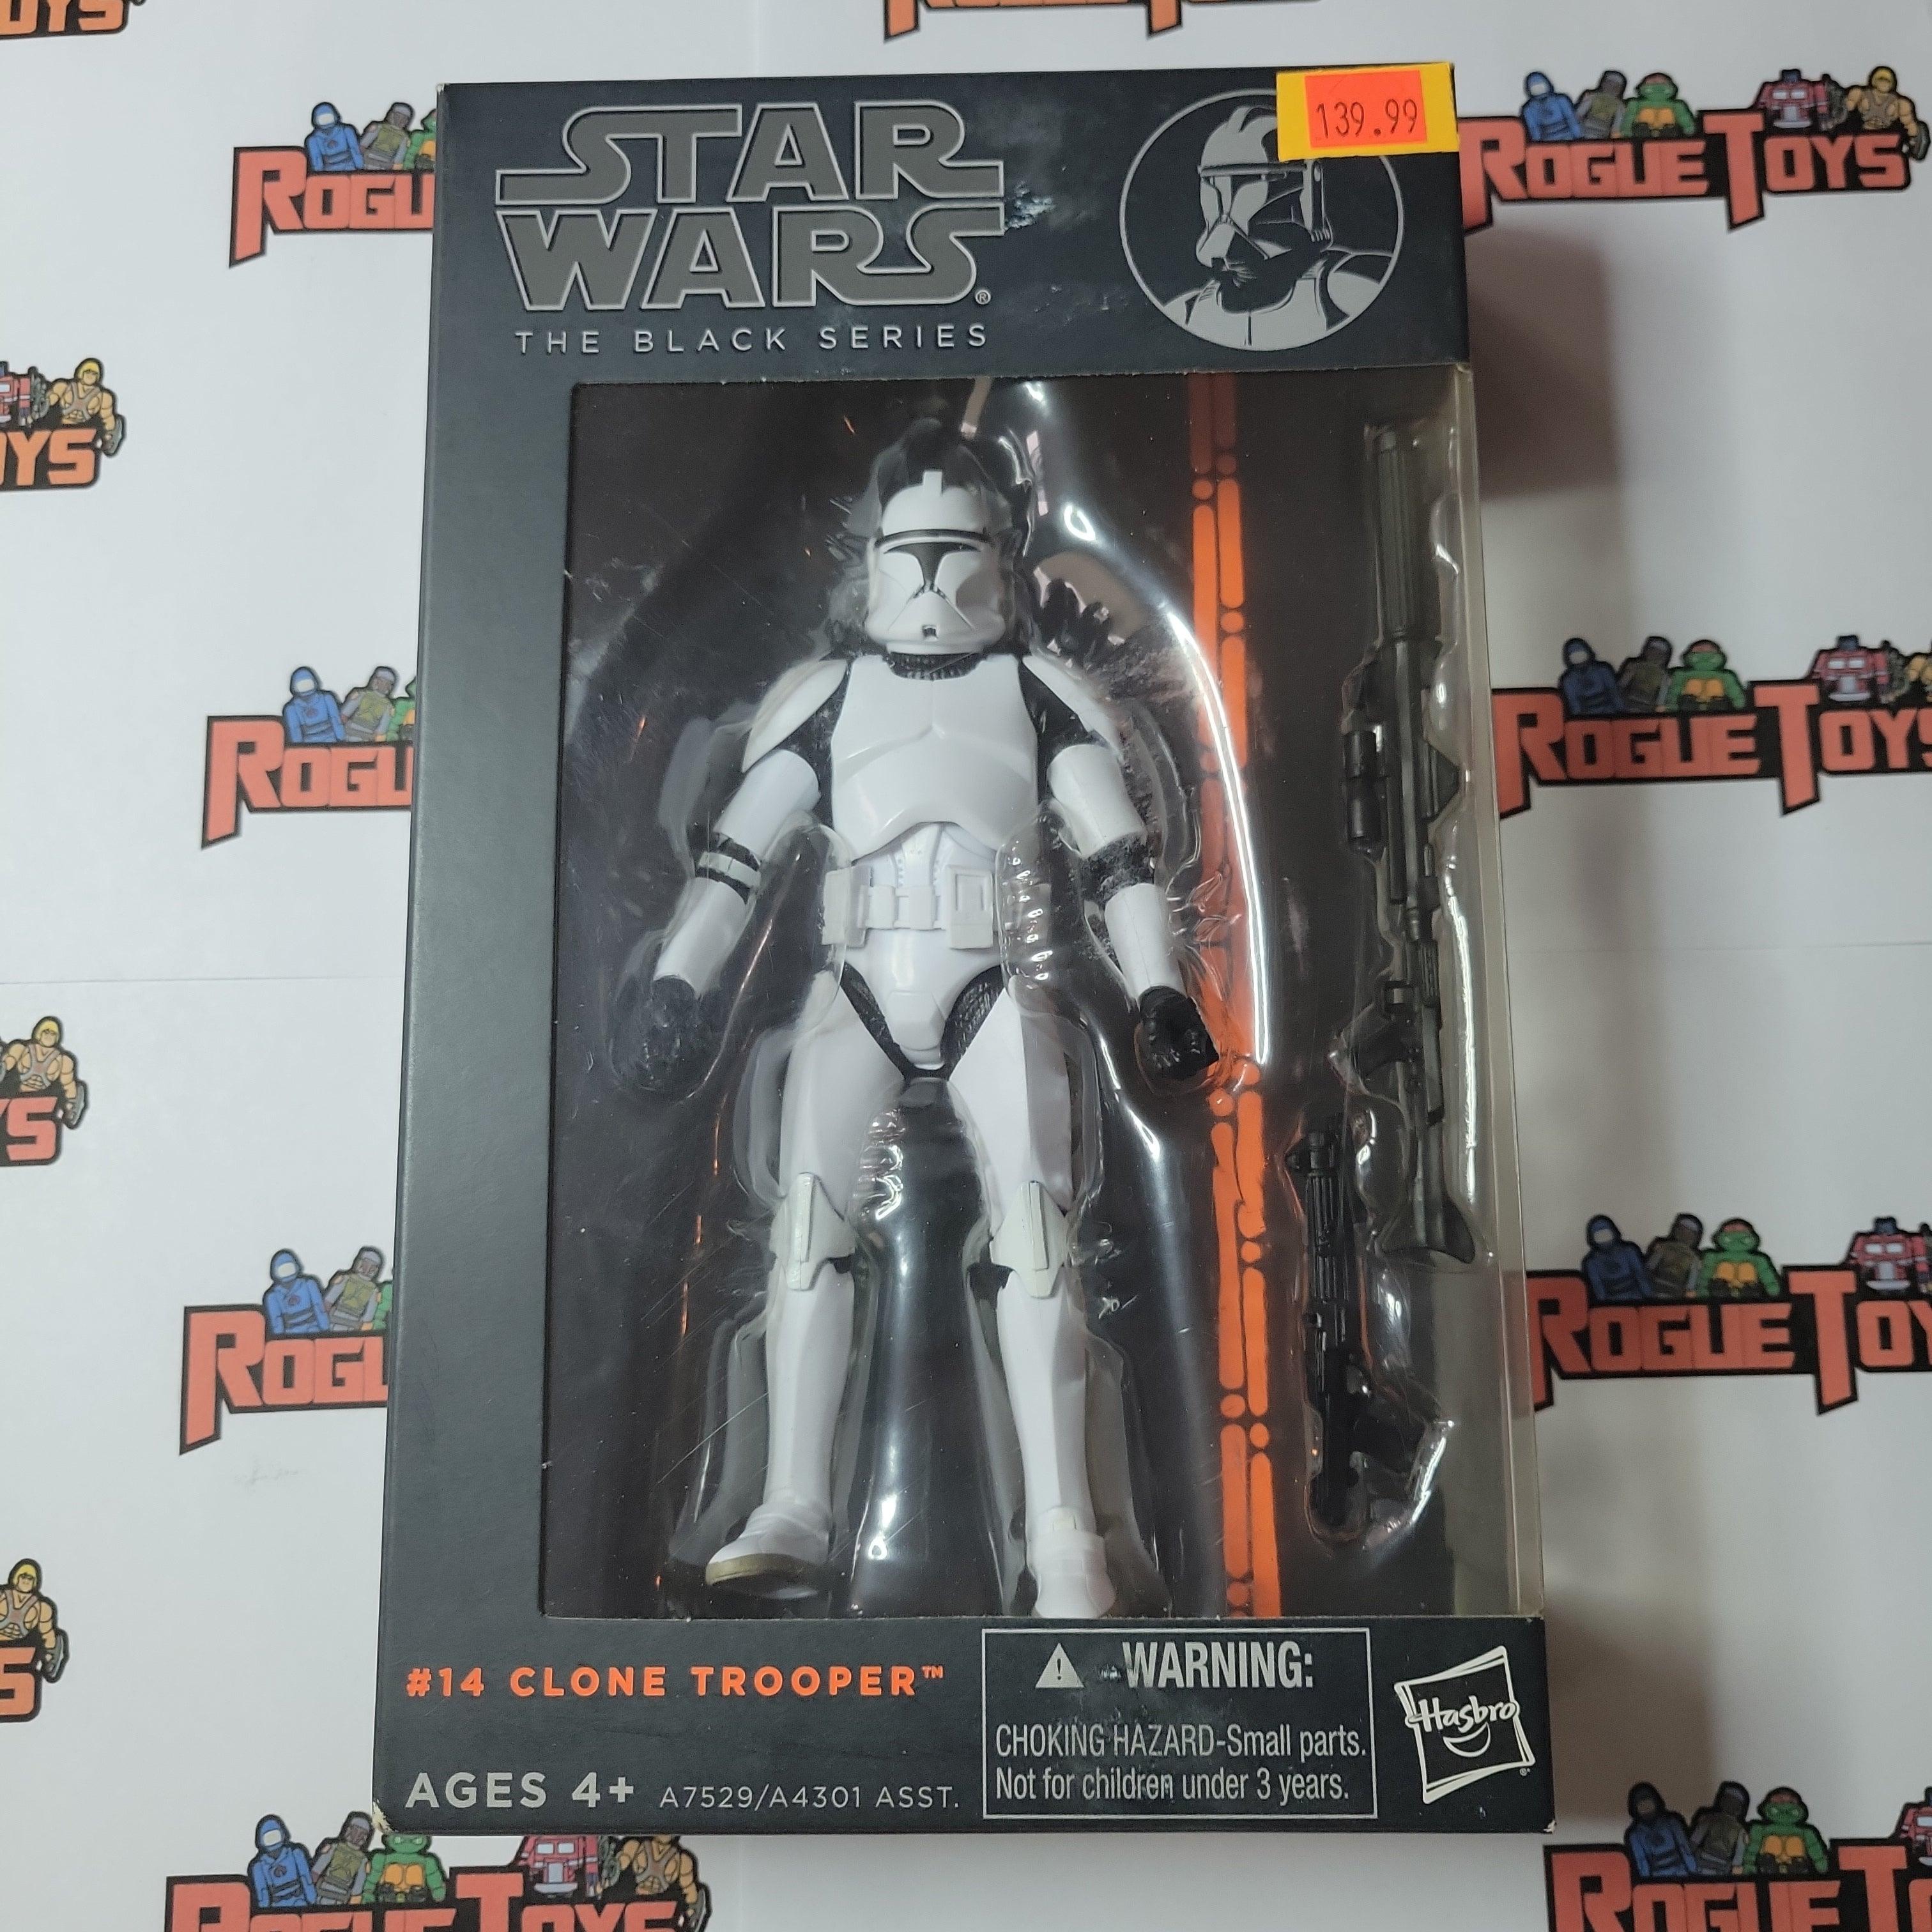 HASBRO Star Wars the Black Series, #14 Clone Trooper - Rogue Toys